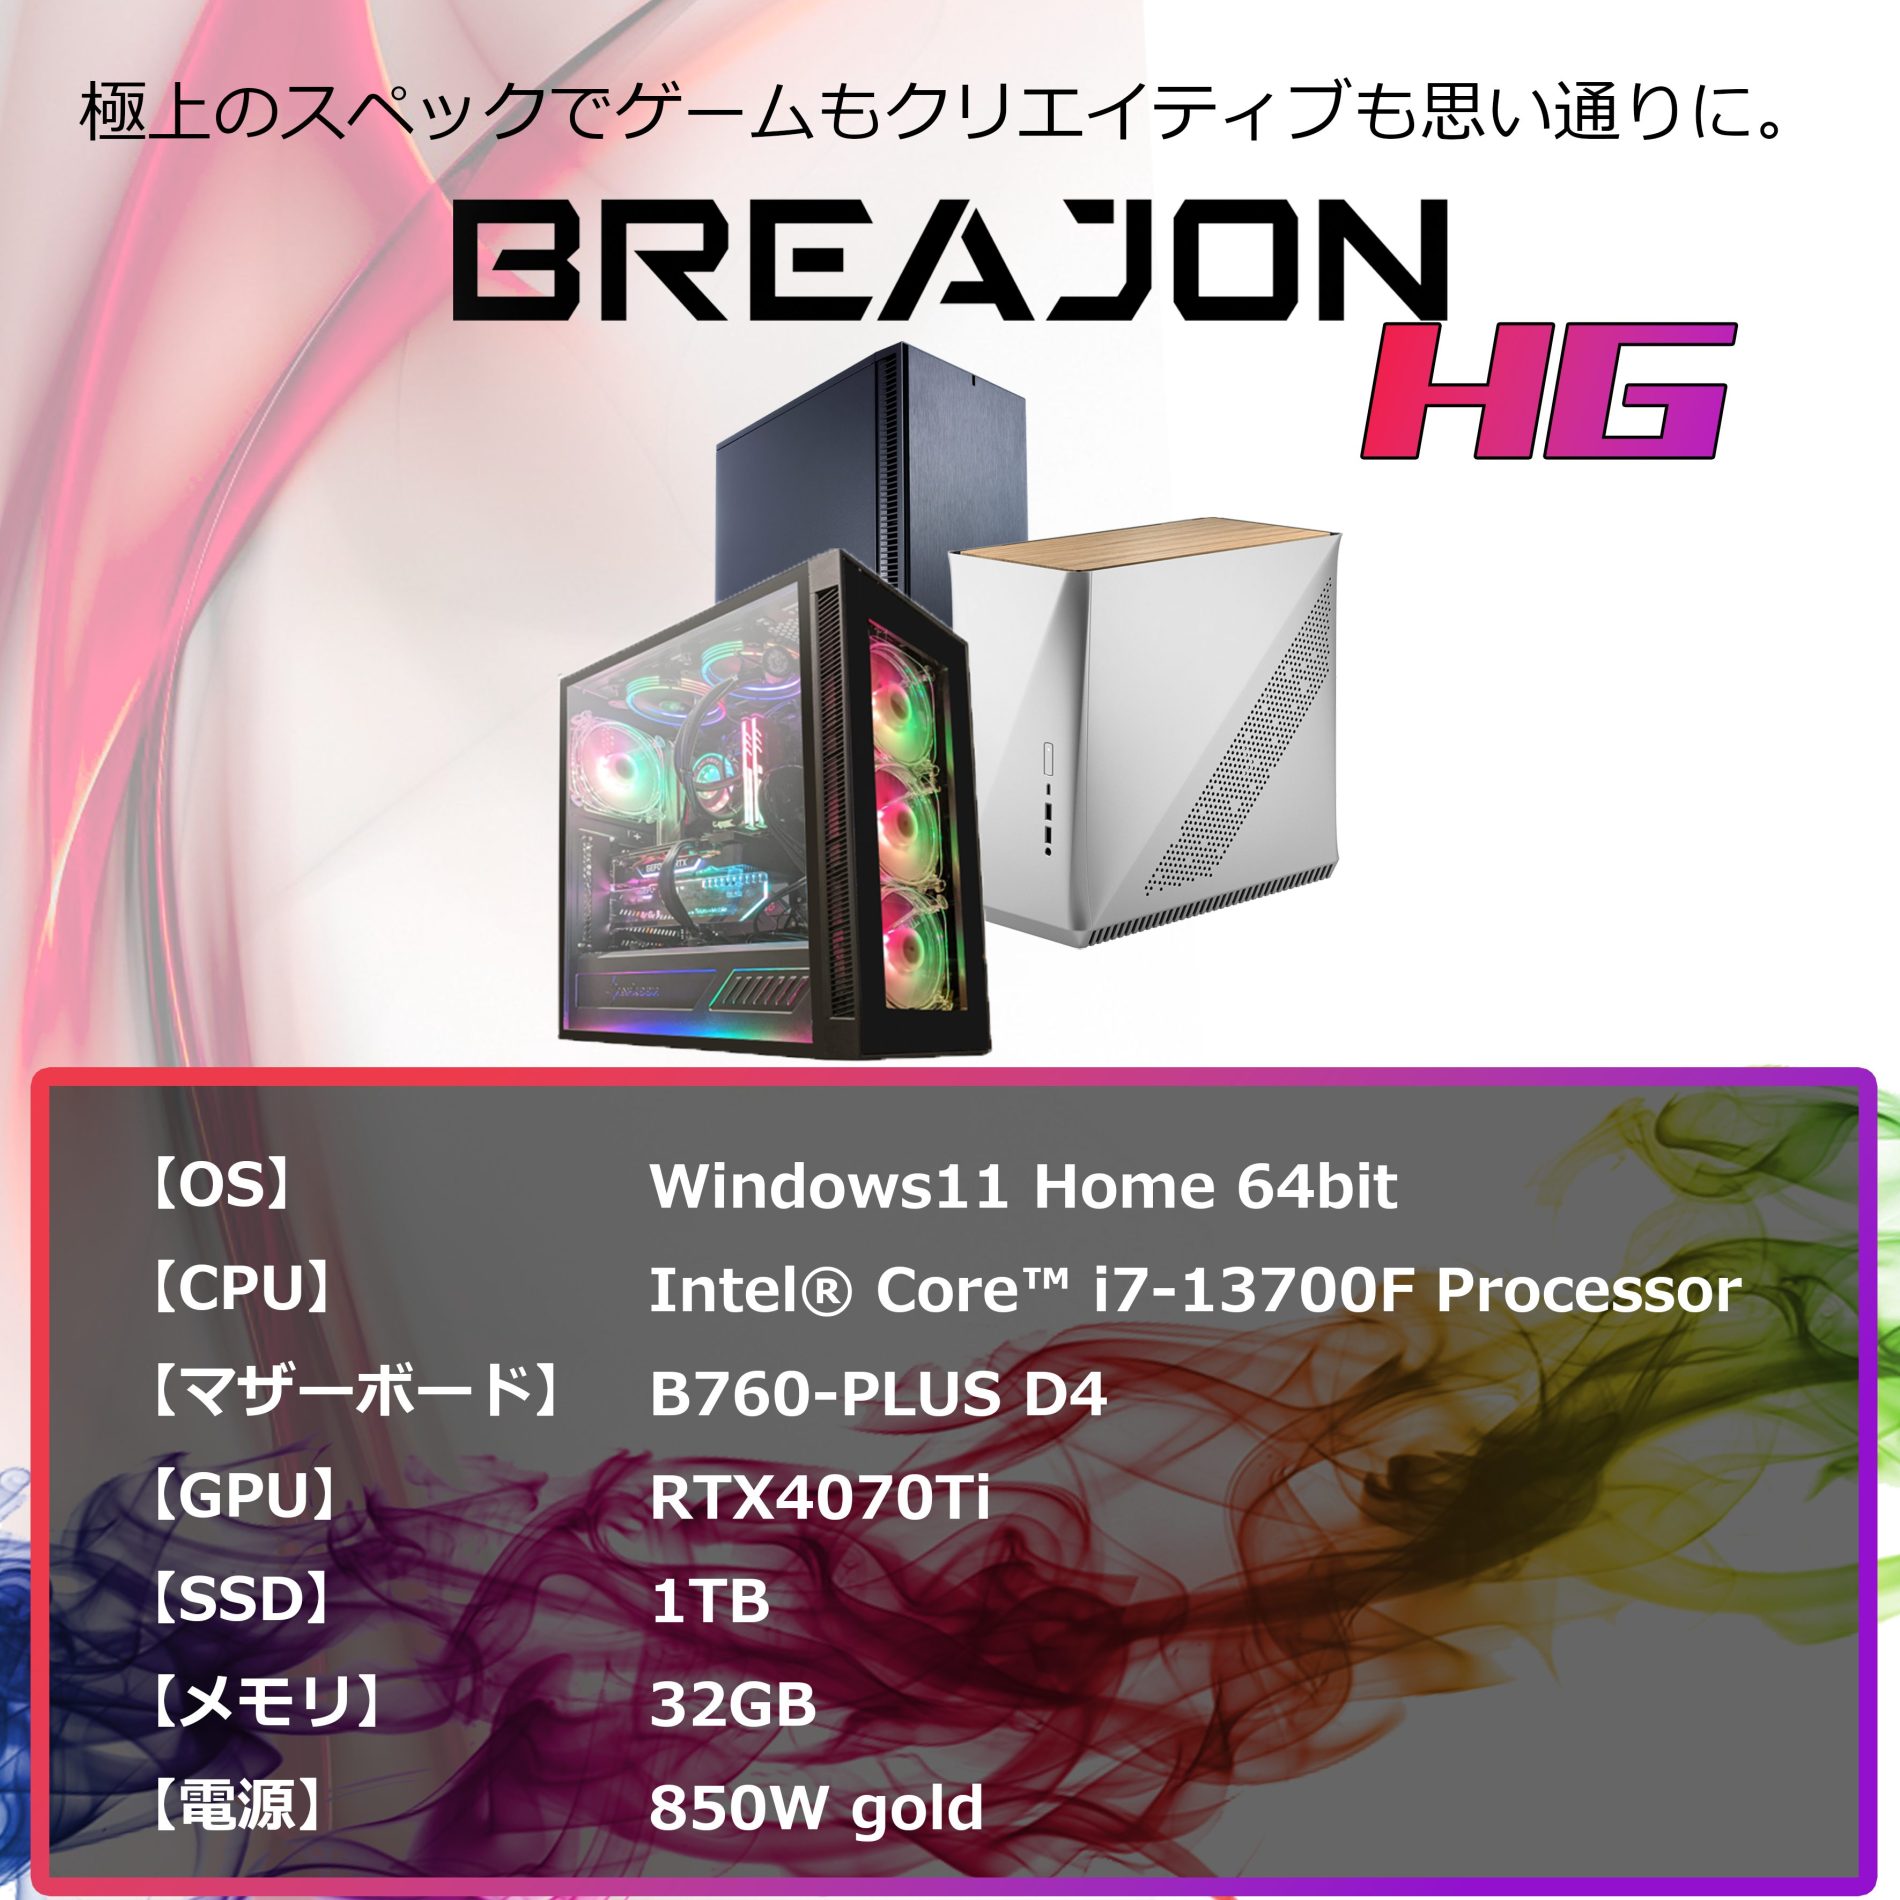 BREAJON HG｜あらゆる3Dゲームでの快適な動作が見込める、極上のスペック。<br>この1台でゲームから配信、動画編集など、あらゆる作業が可能です。